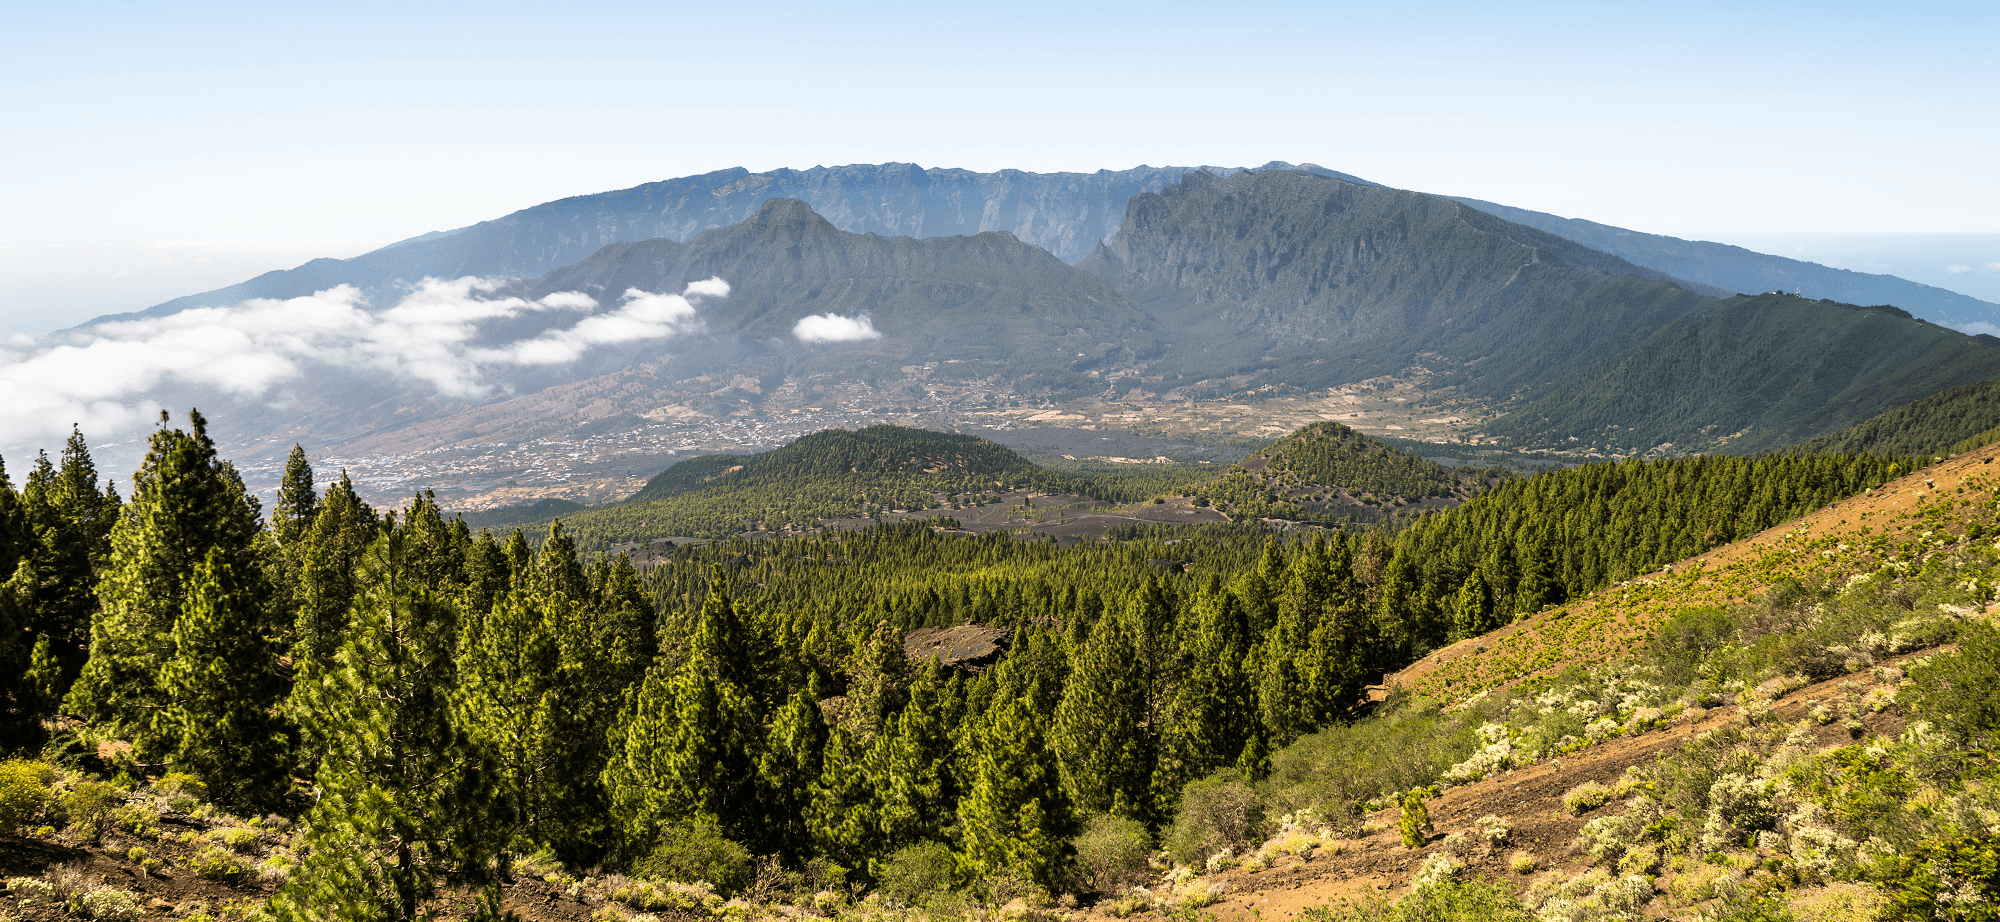 Hiking La Palma Caldera de Taburiente national park